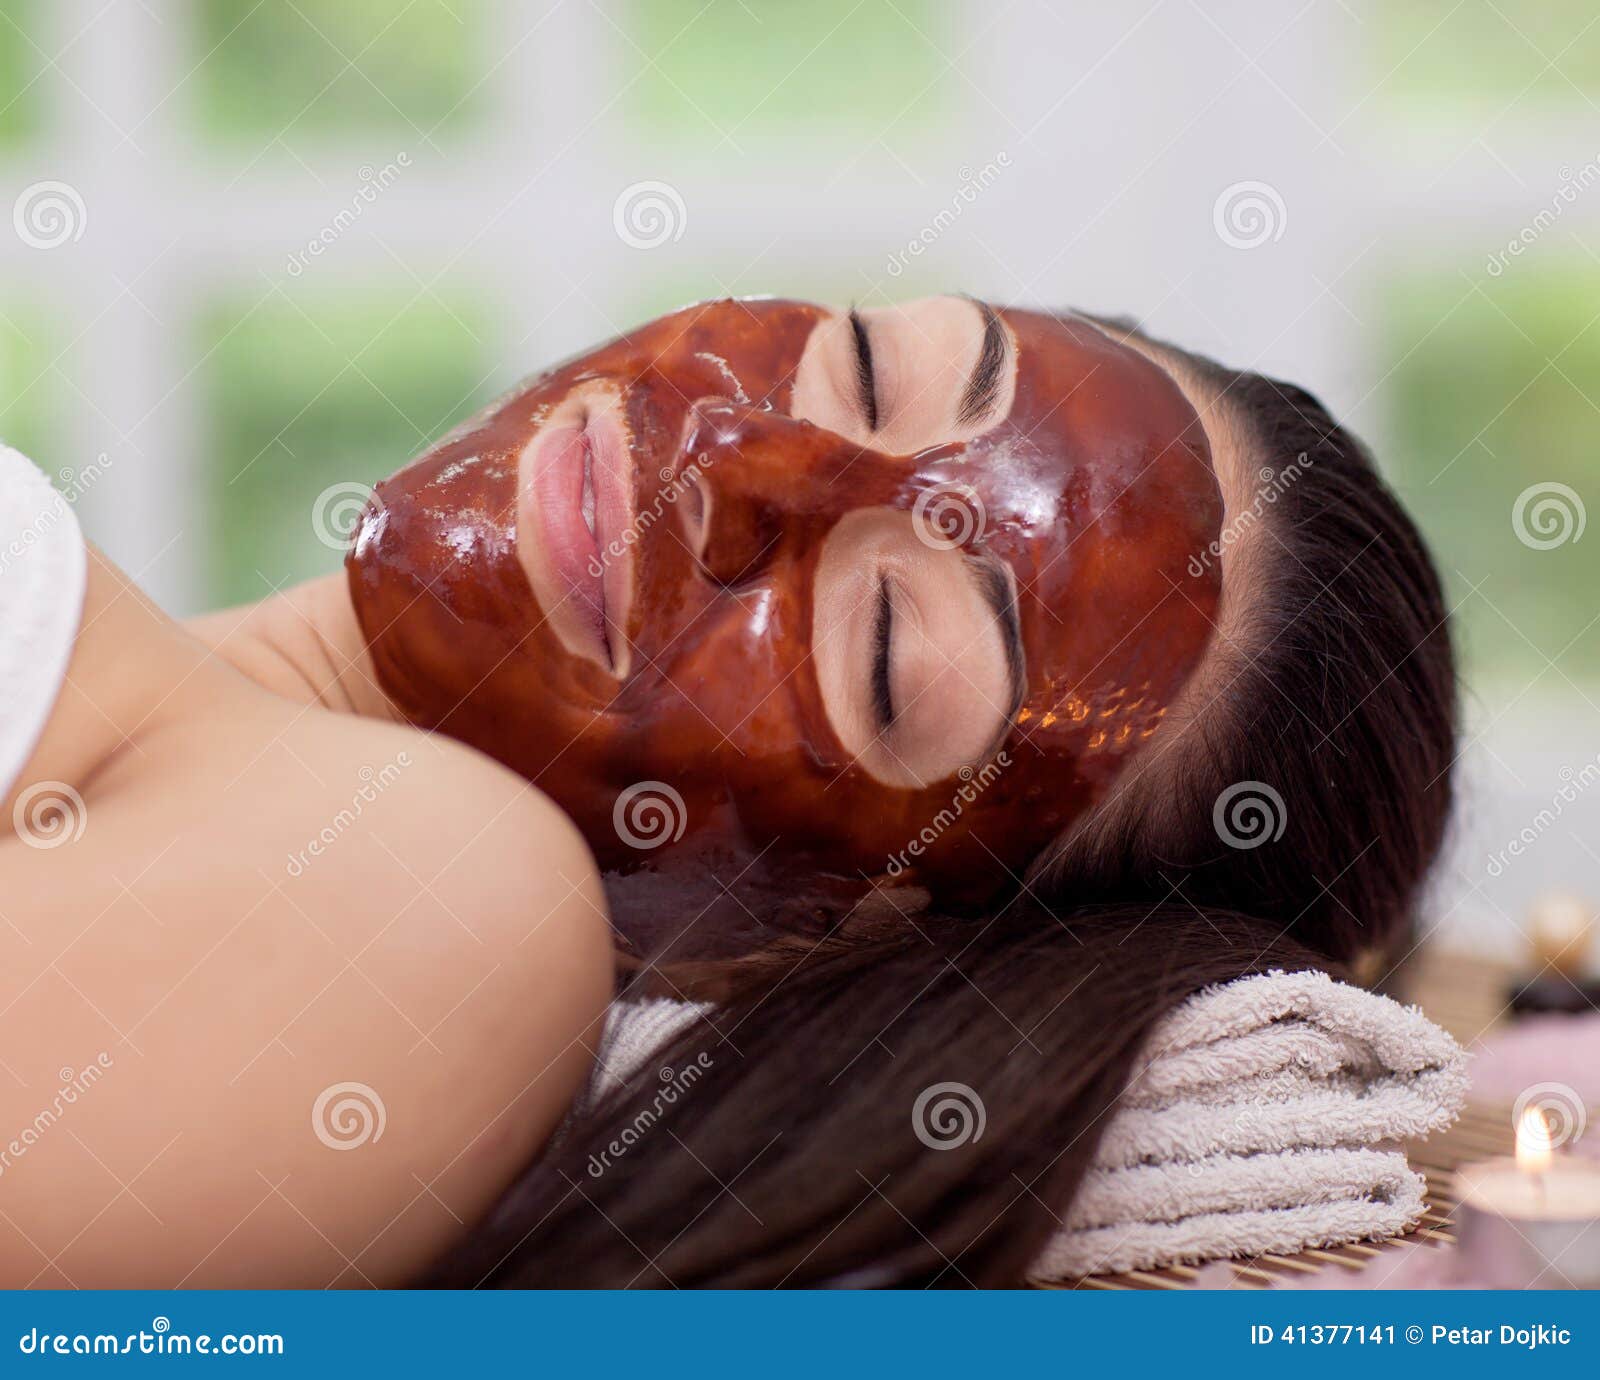 259 Hot Chocolate Massage Stock Photos pic